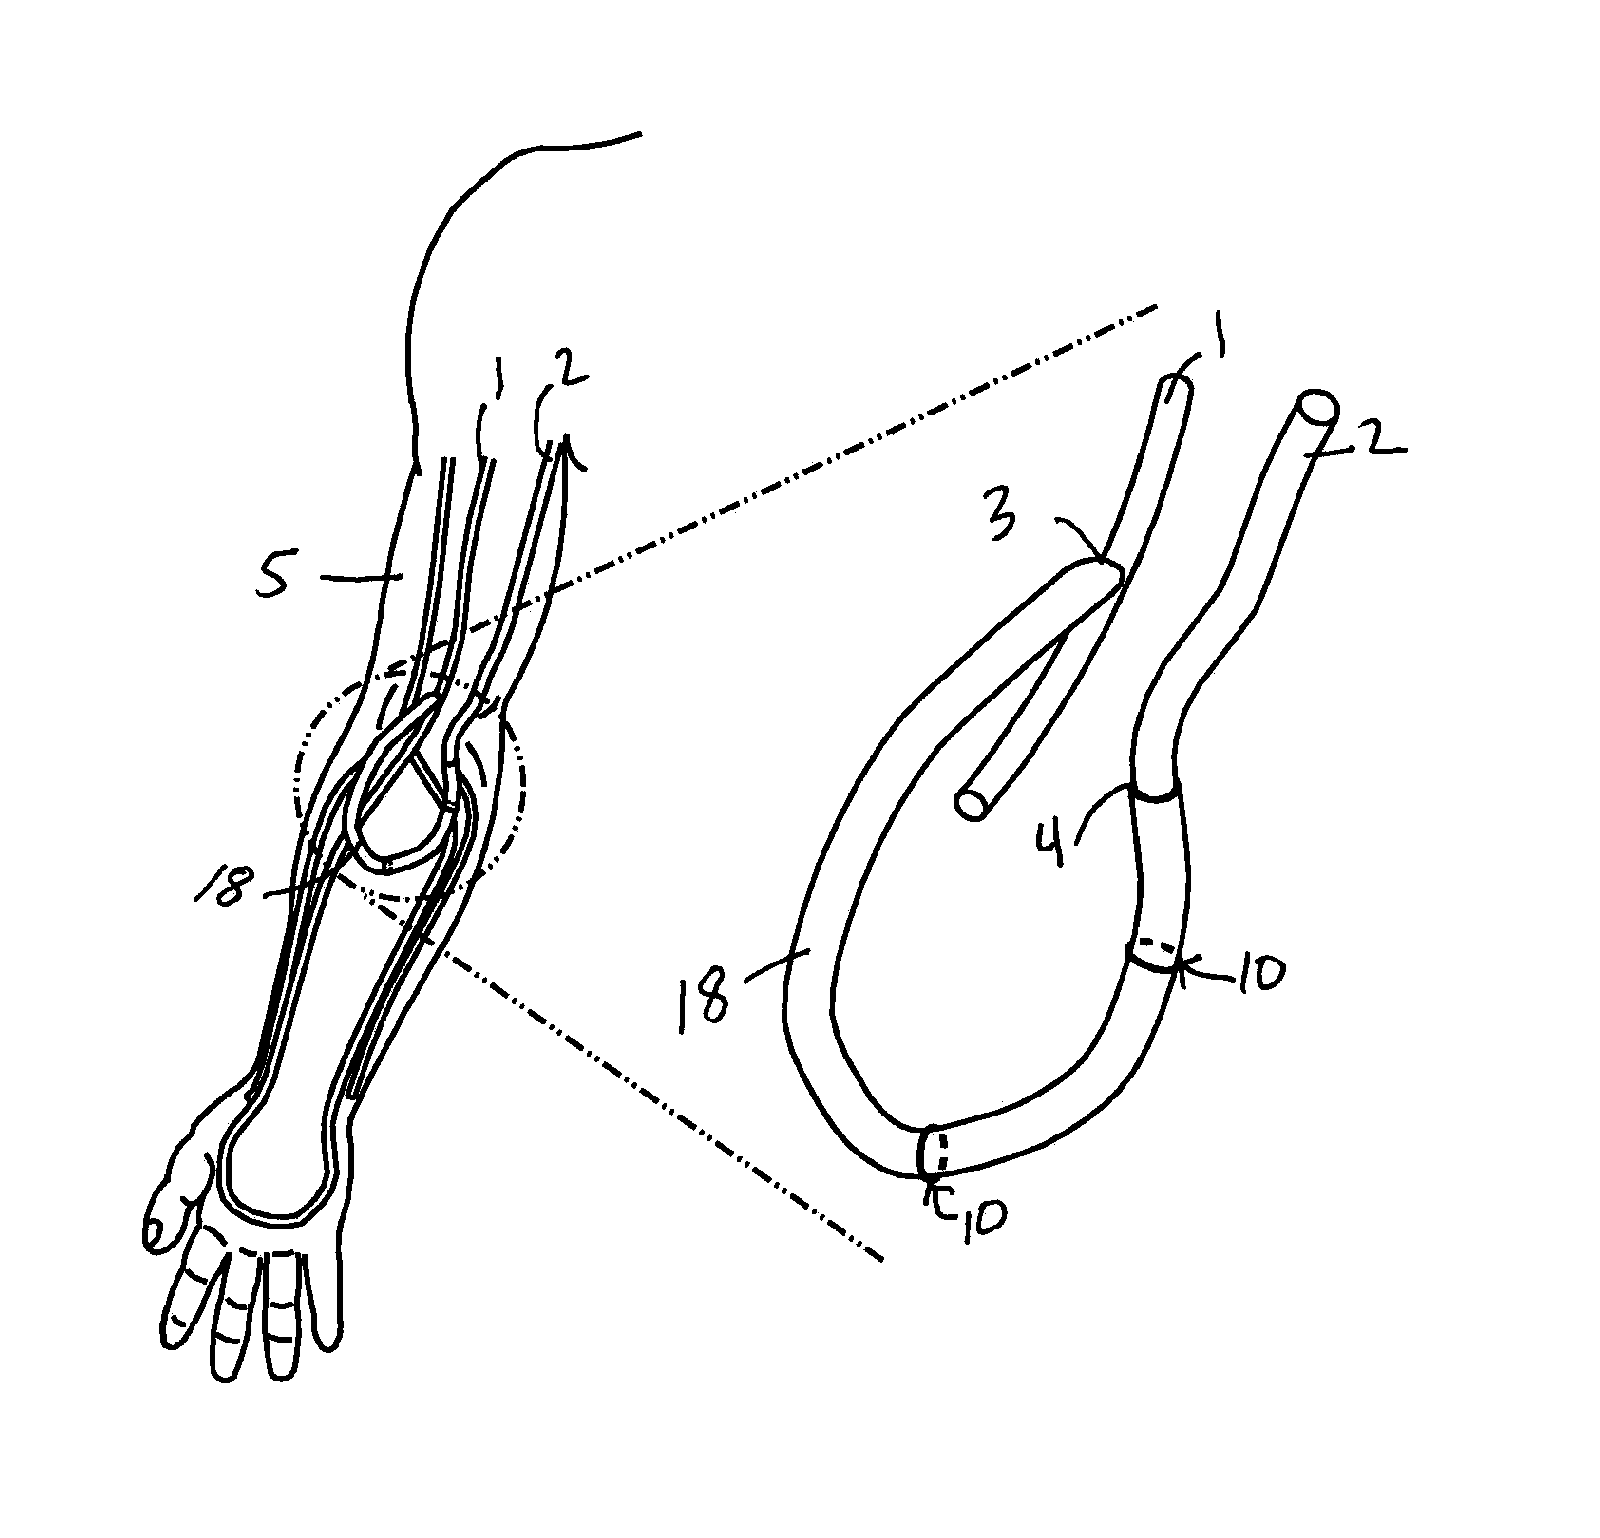 Hemodialysis arterio-venous graft with a ring-like diameter-adjustable device